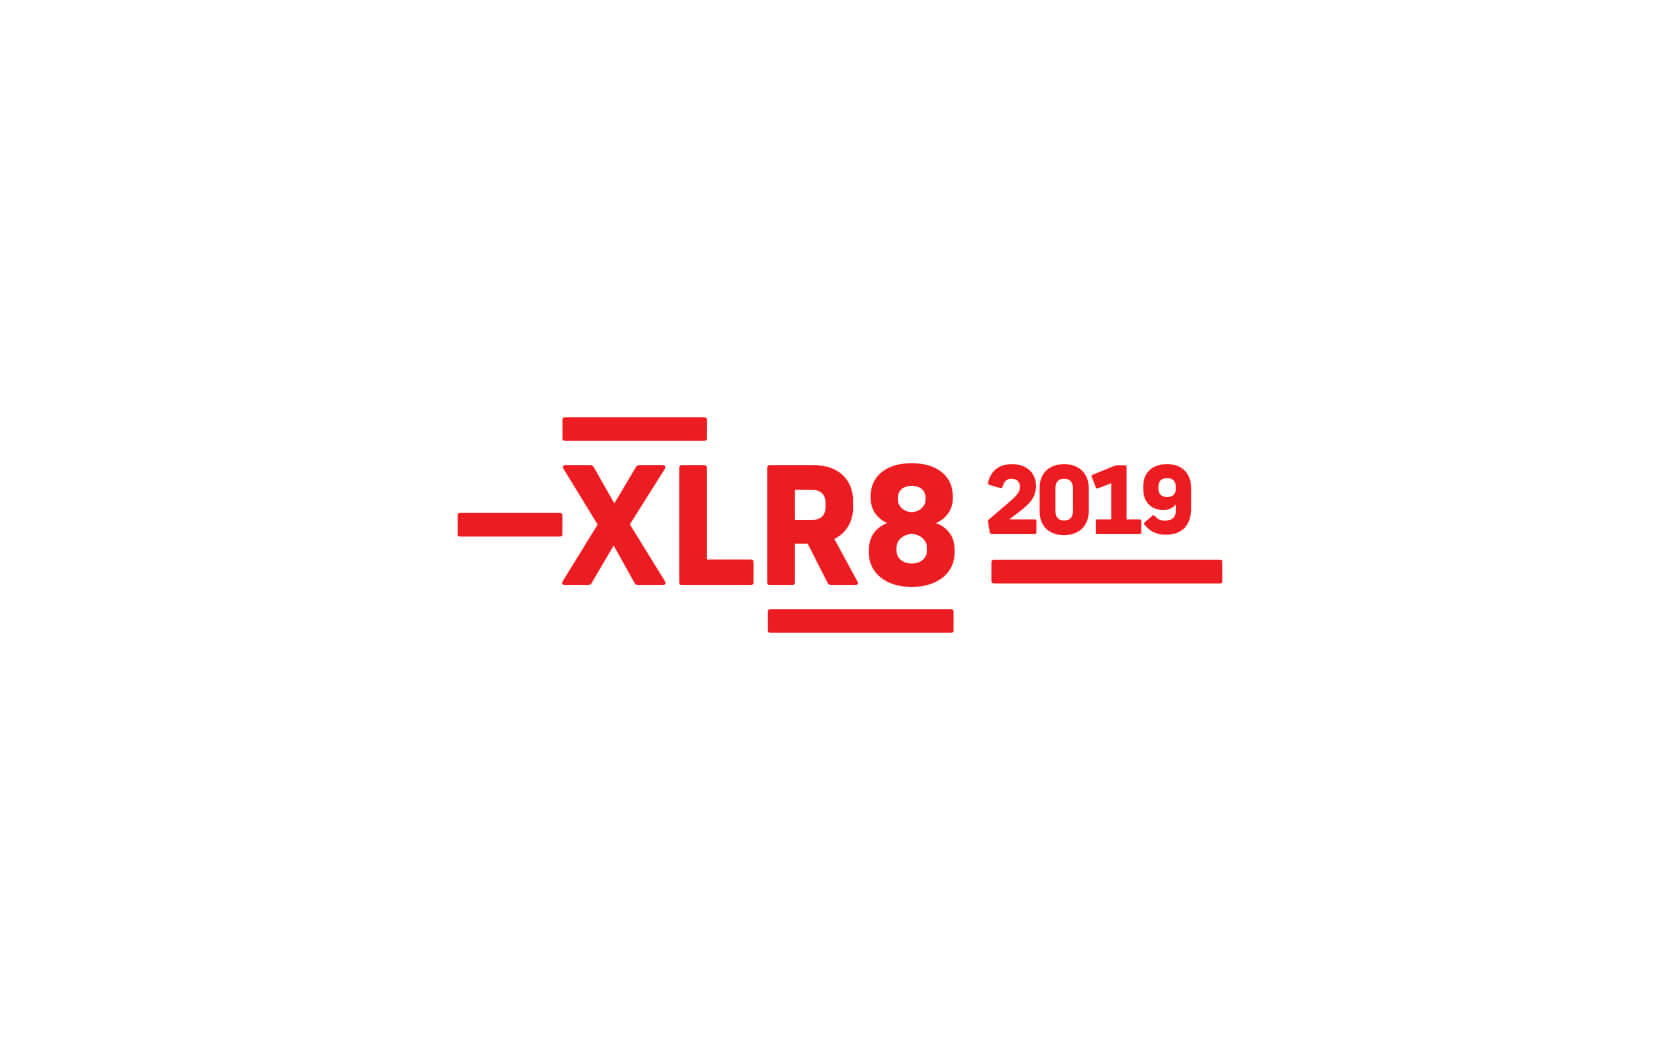 XLR8. Brand logo in red colour